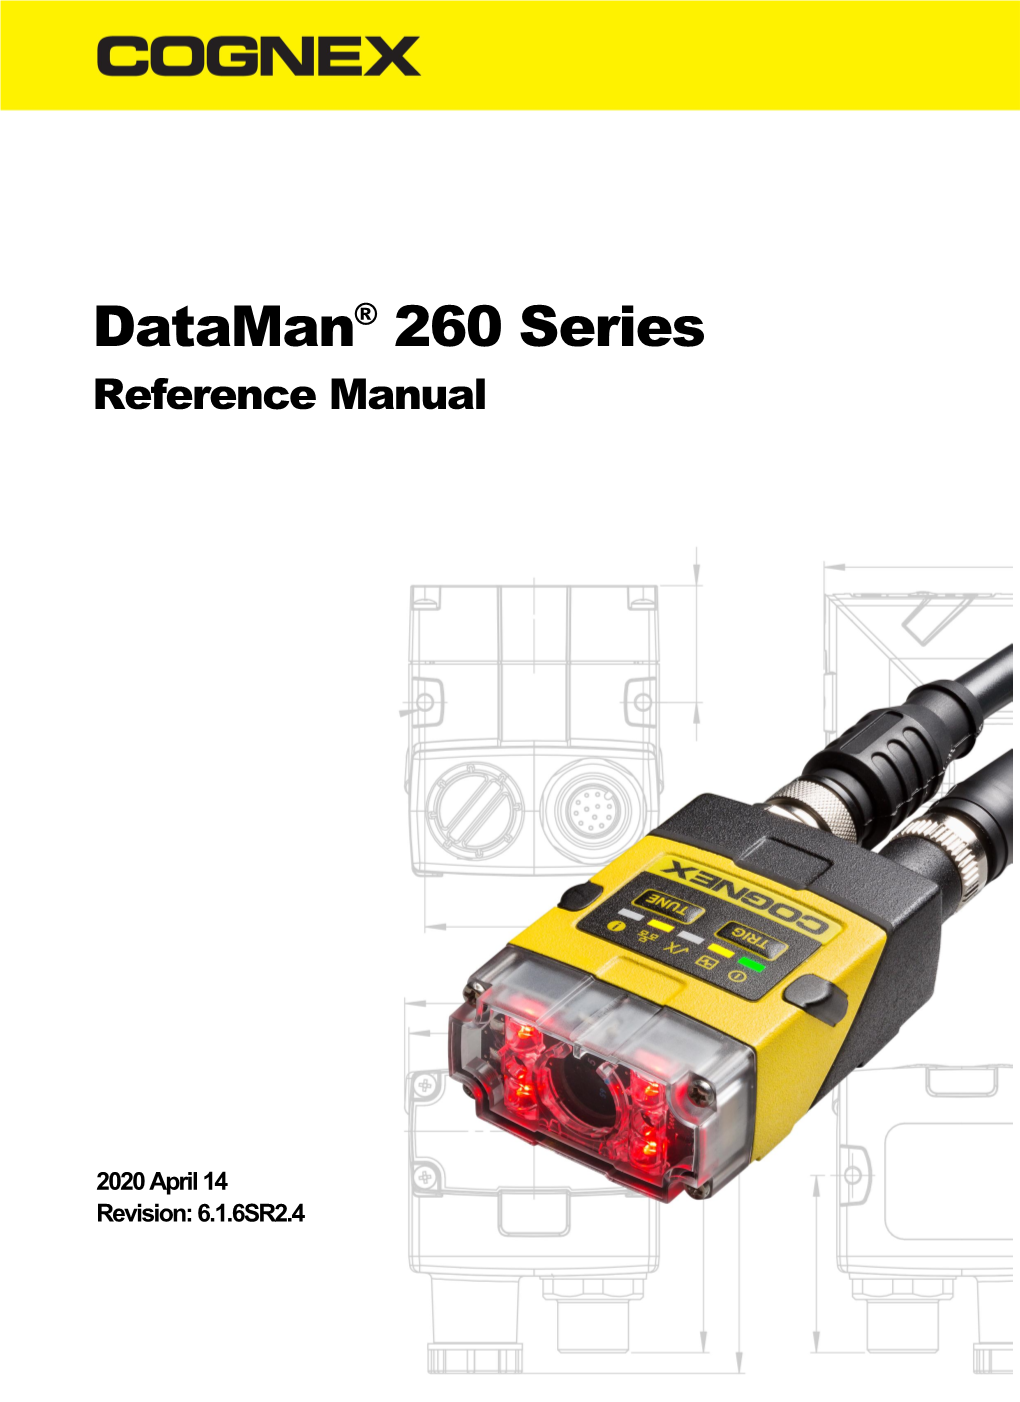 Dataman® 260 Series Reference Manual